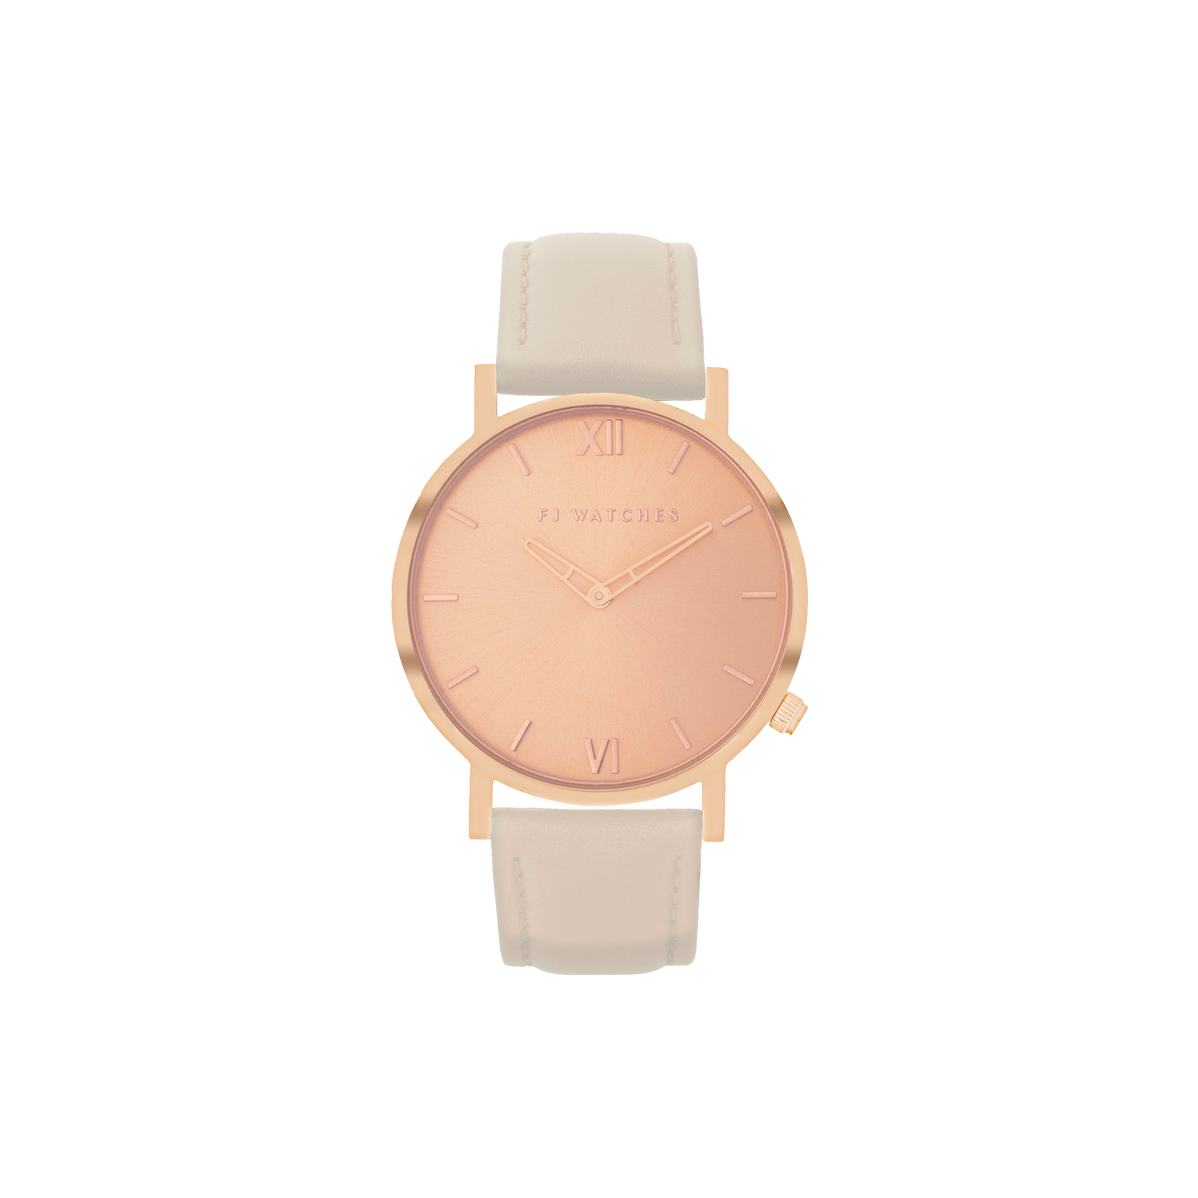 FJ Watches sunset rose gold rosegold watch women 36mm pinky beige leather minimalist